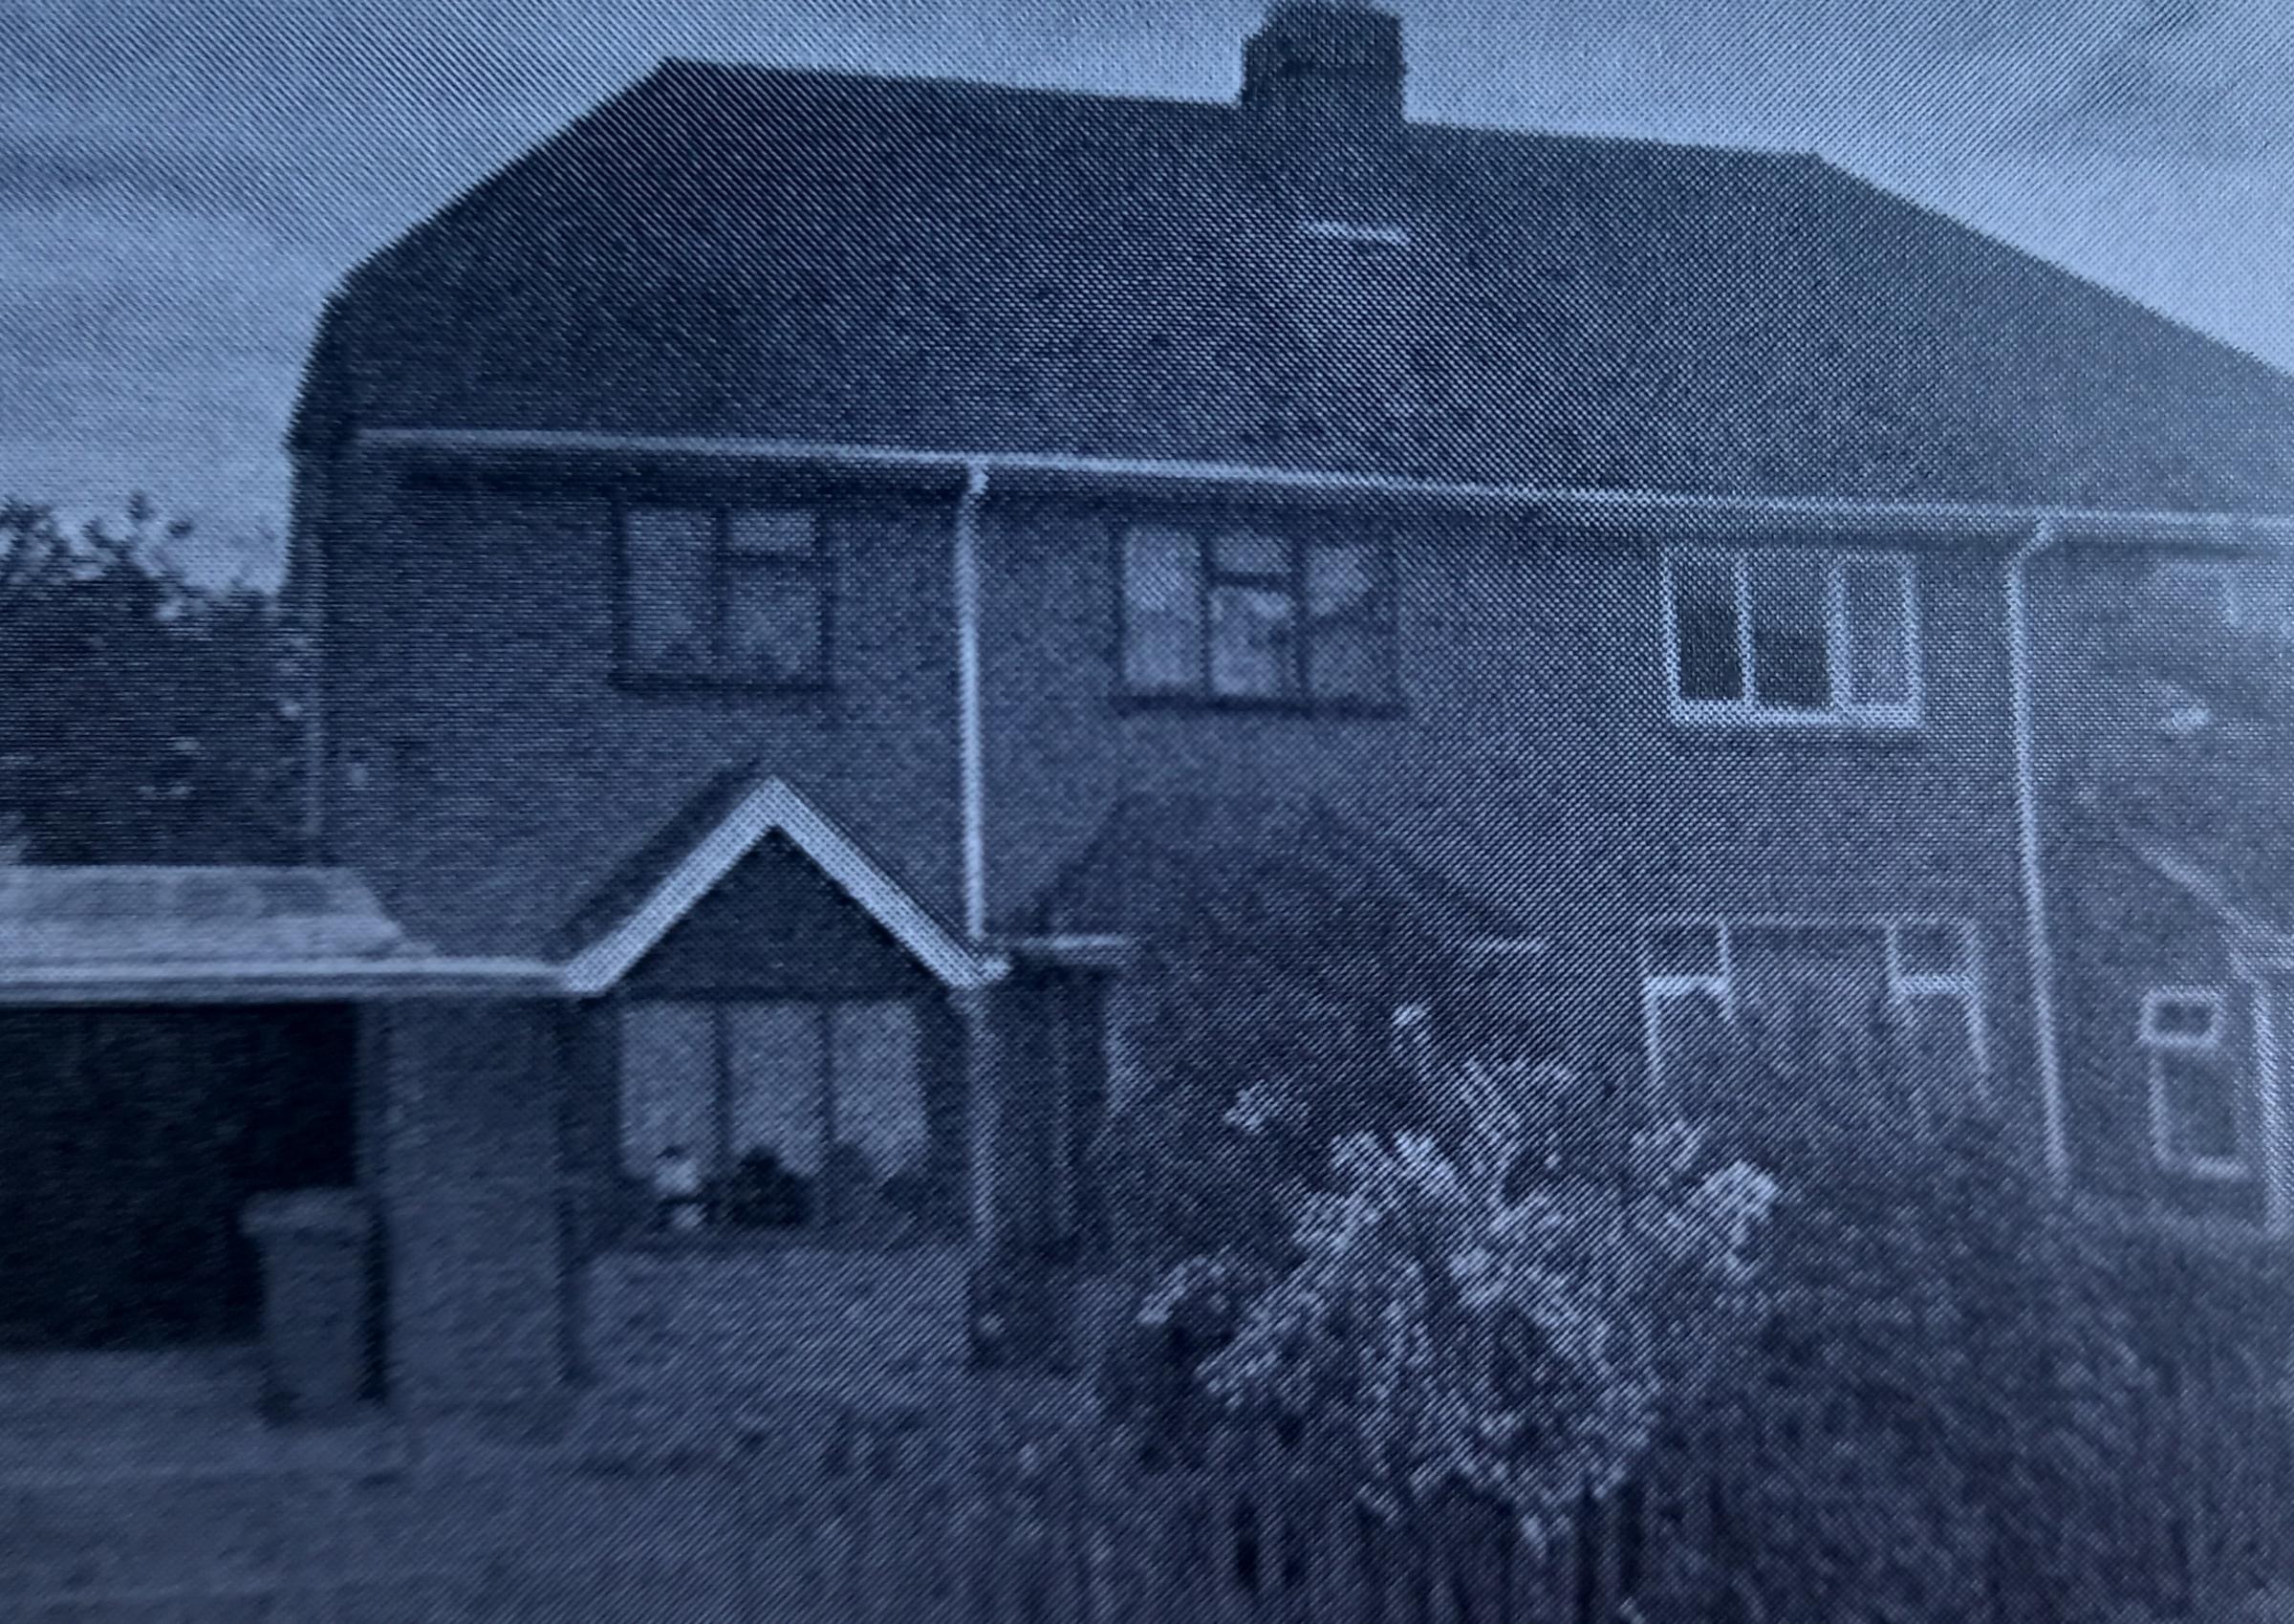 The Davies family home in Birchen Coppice, Kidderminster where John Davies was murdered in 1981